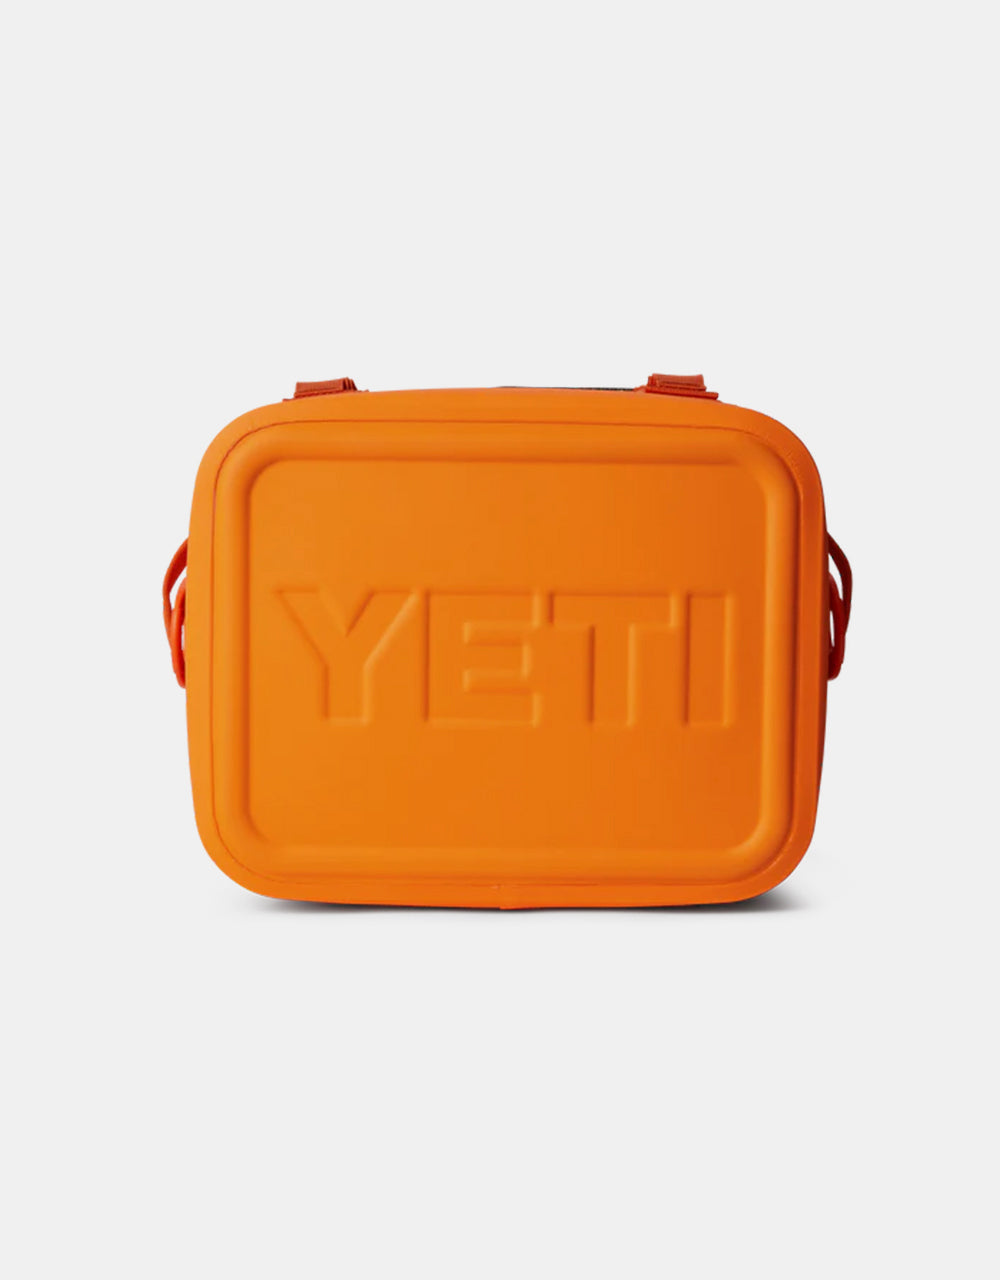 YETI Hopper Flip® 12 Soft Cooler - King Crab Orange